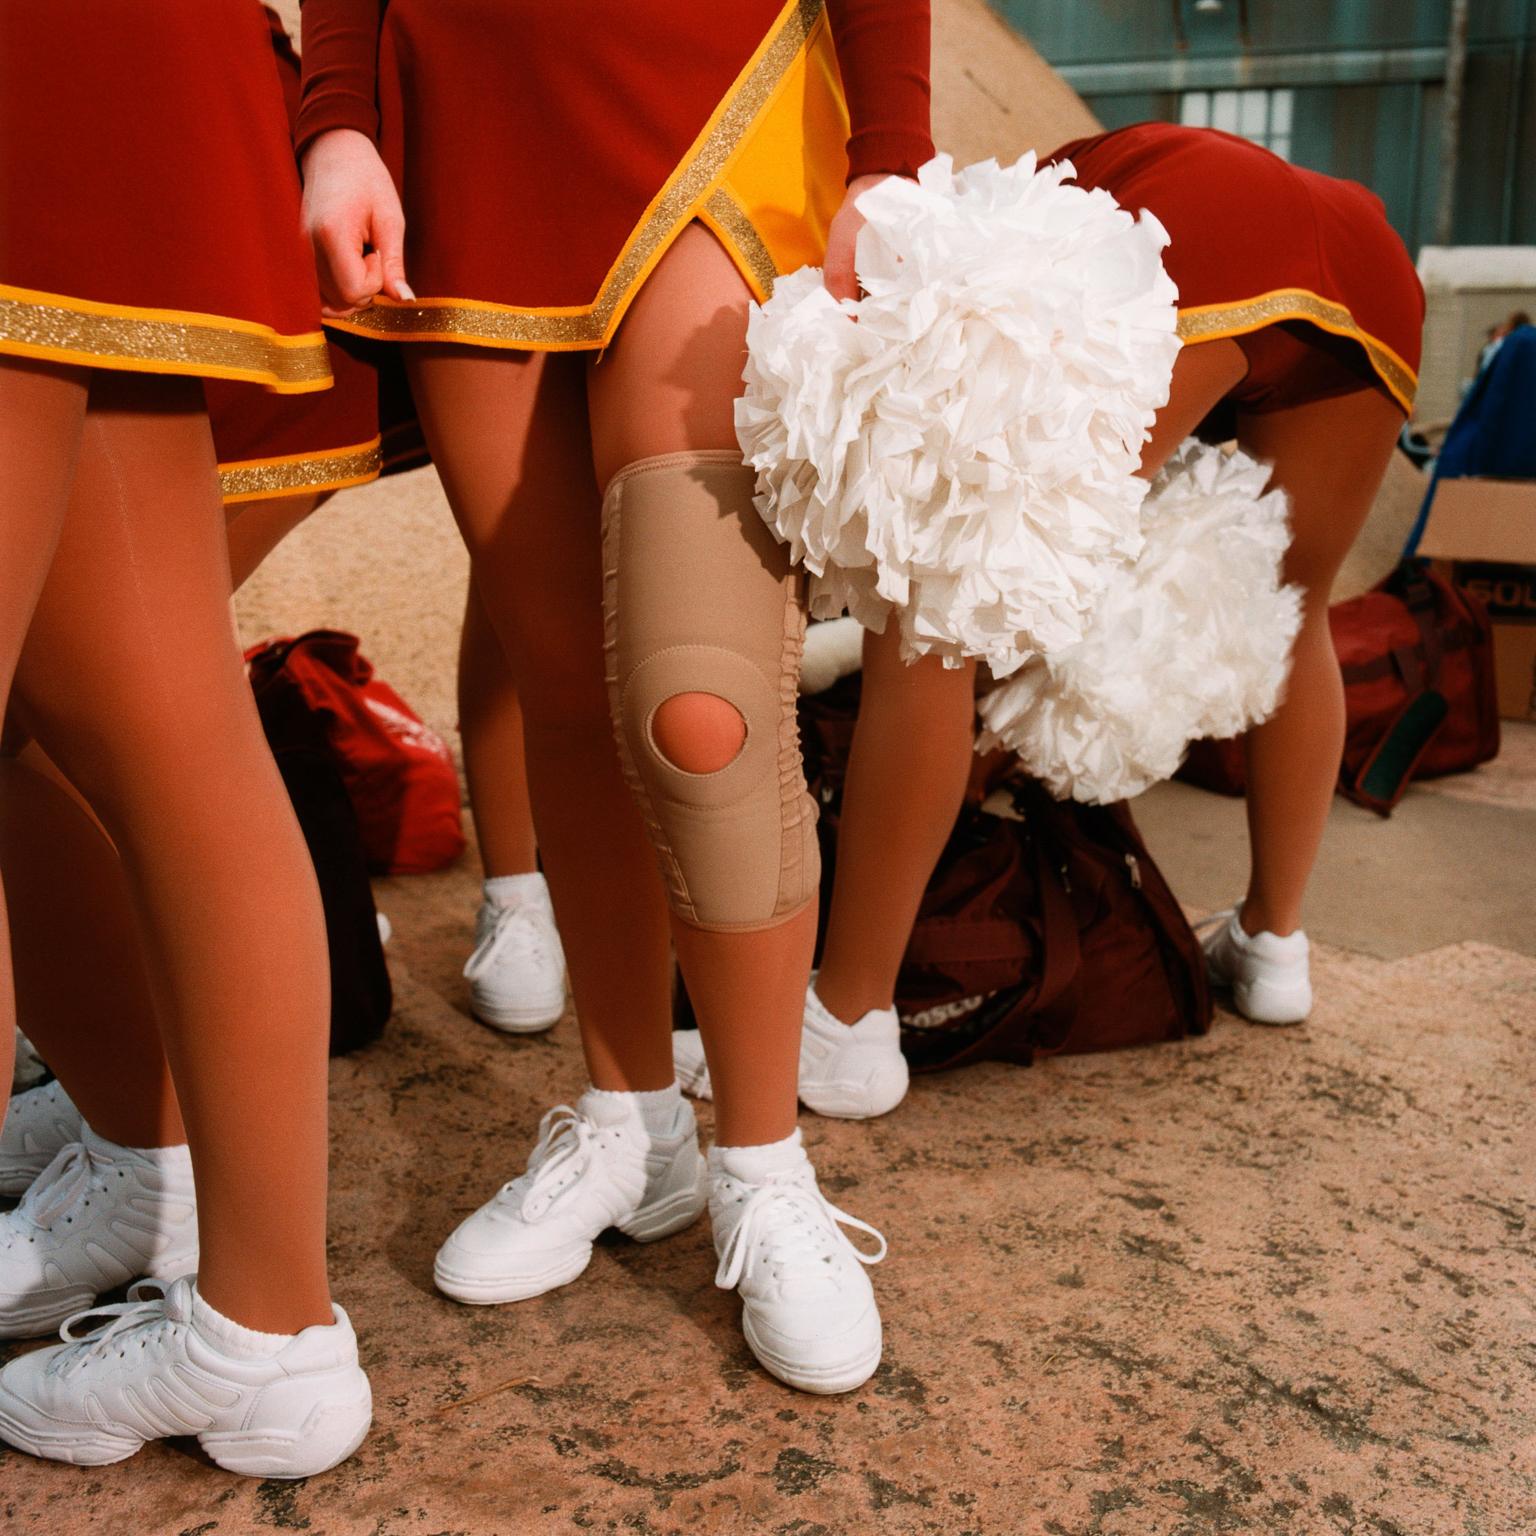 Brian Finke Color Photograph - Untitled (Cheerleading no. 45)